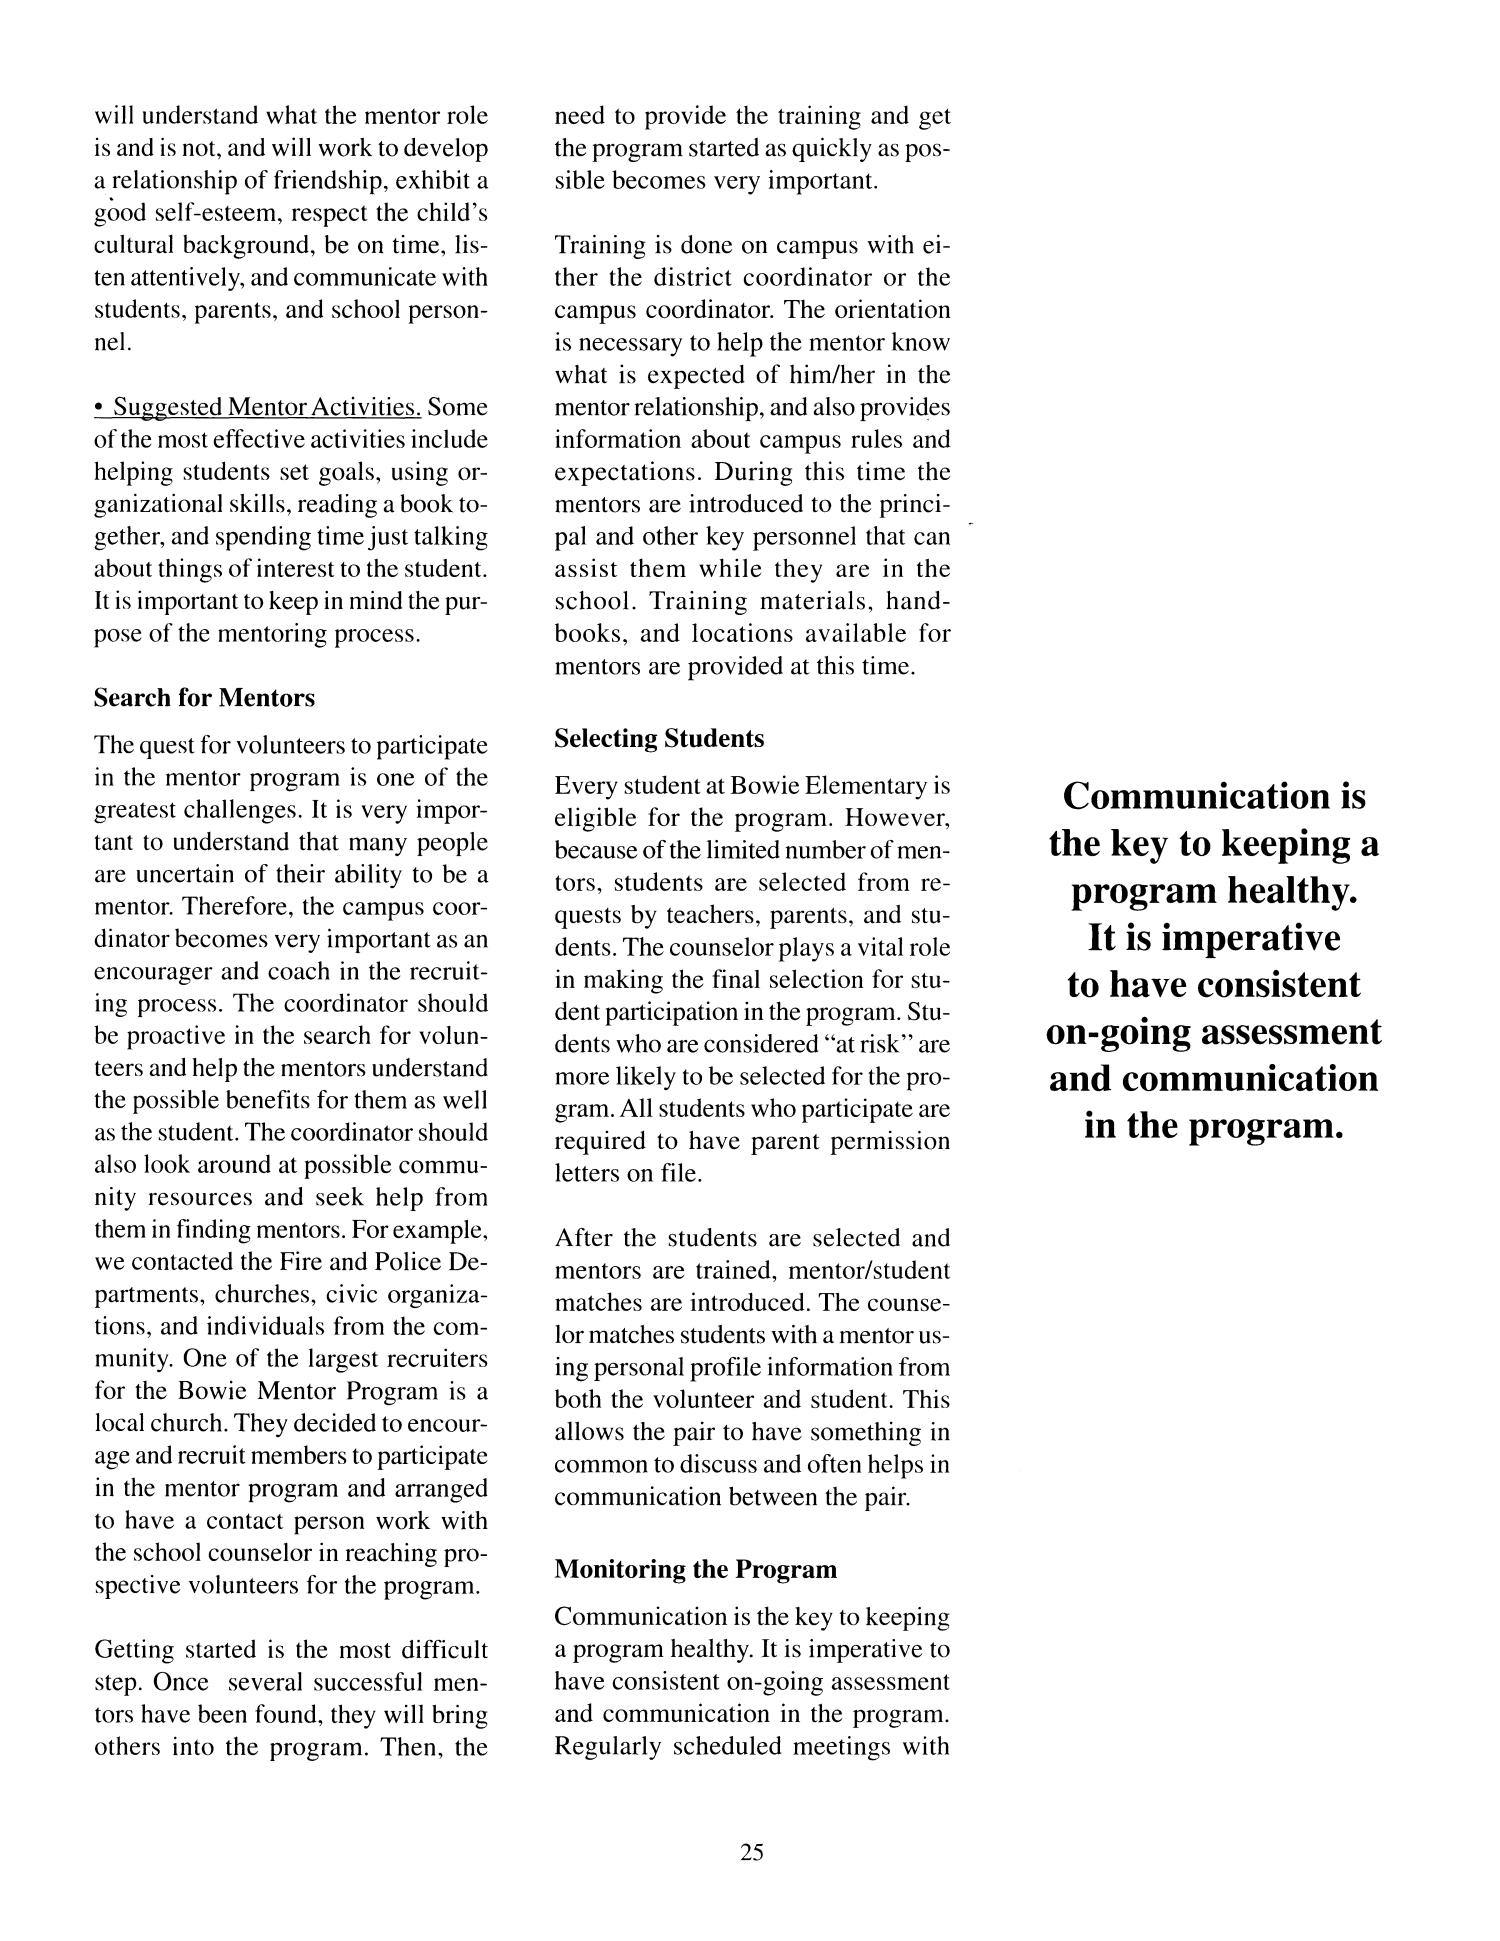 Journal of the Effective Schools Project, Volume 6, 2000
                                                
                                                    25
                                                